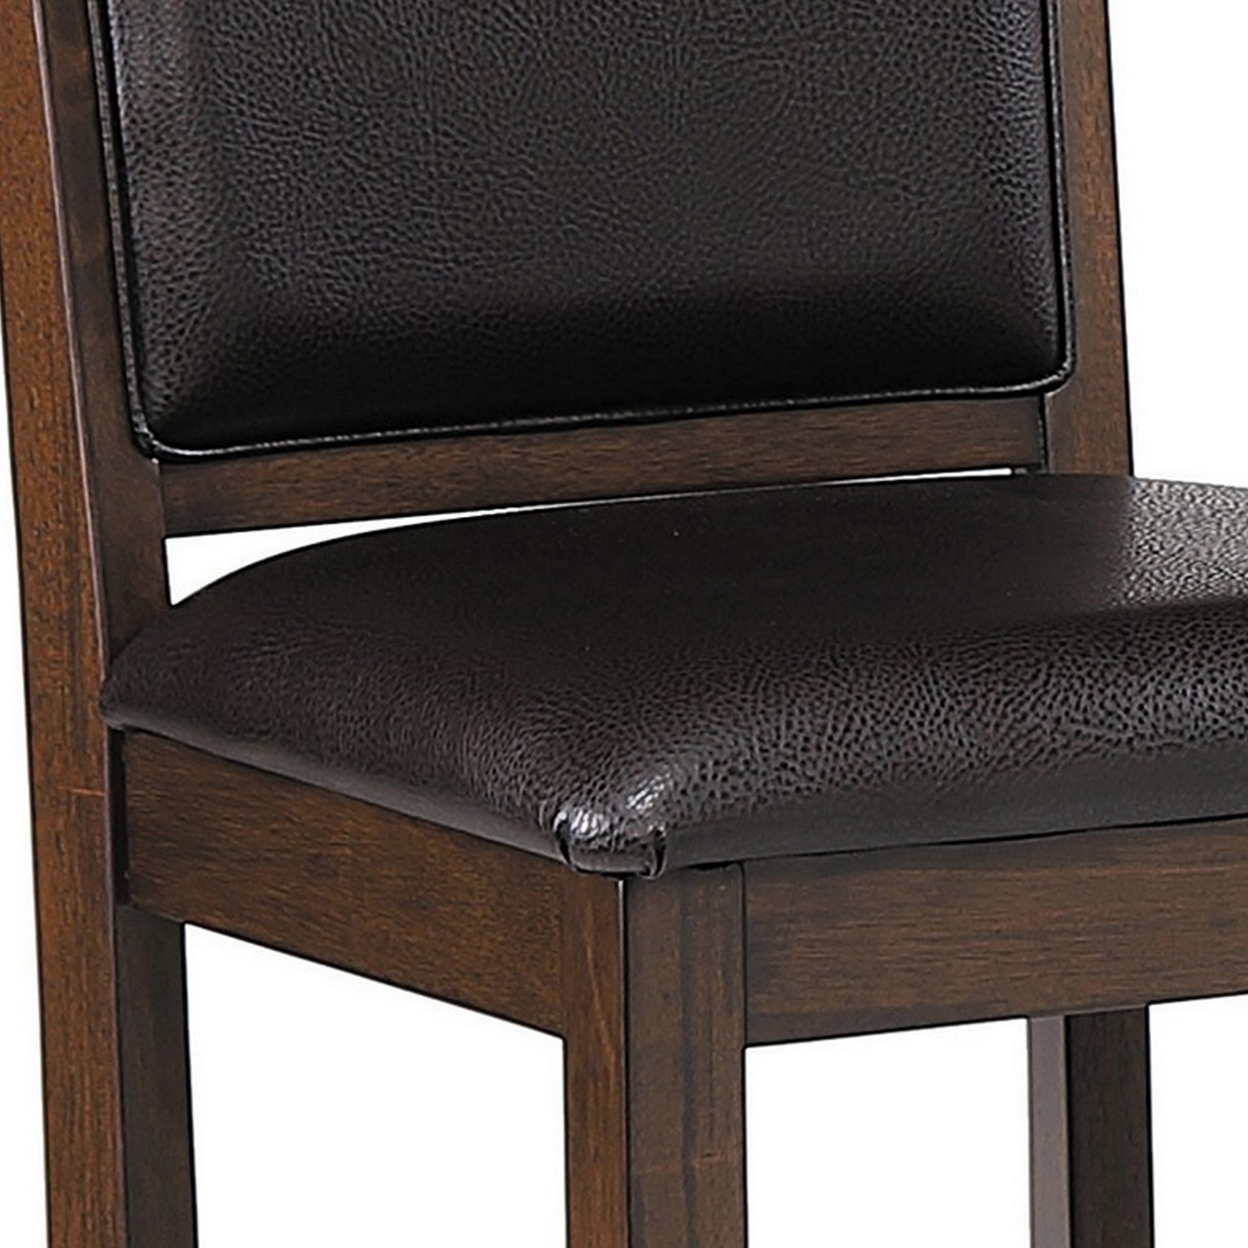 26 Inch Counter Height Chair, Set Of 2, Padded Back, Slender Legs, Brown- Saltoro Sherpi